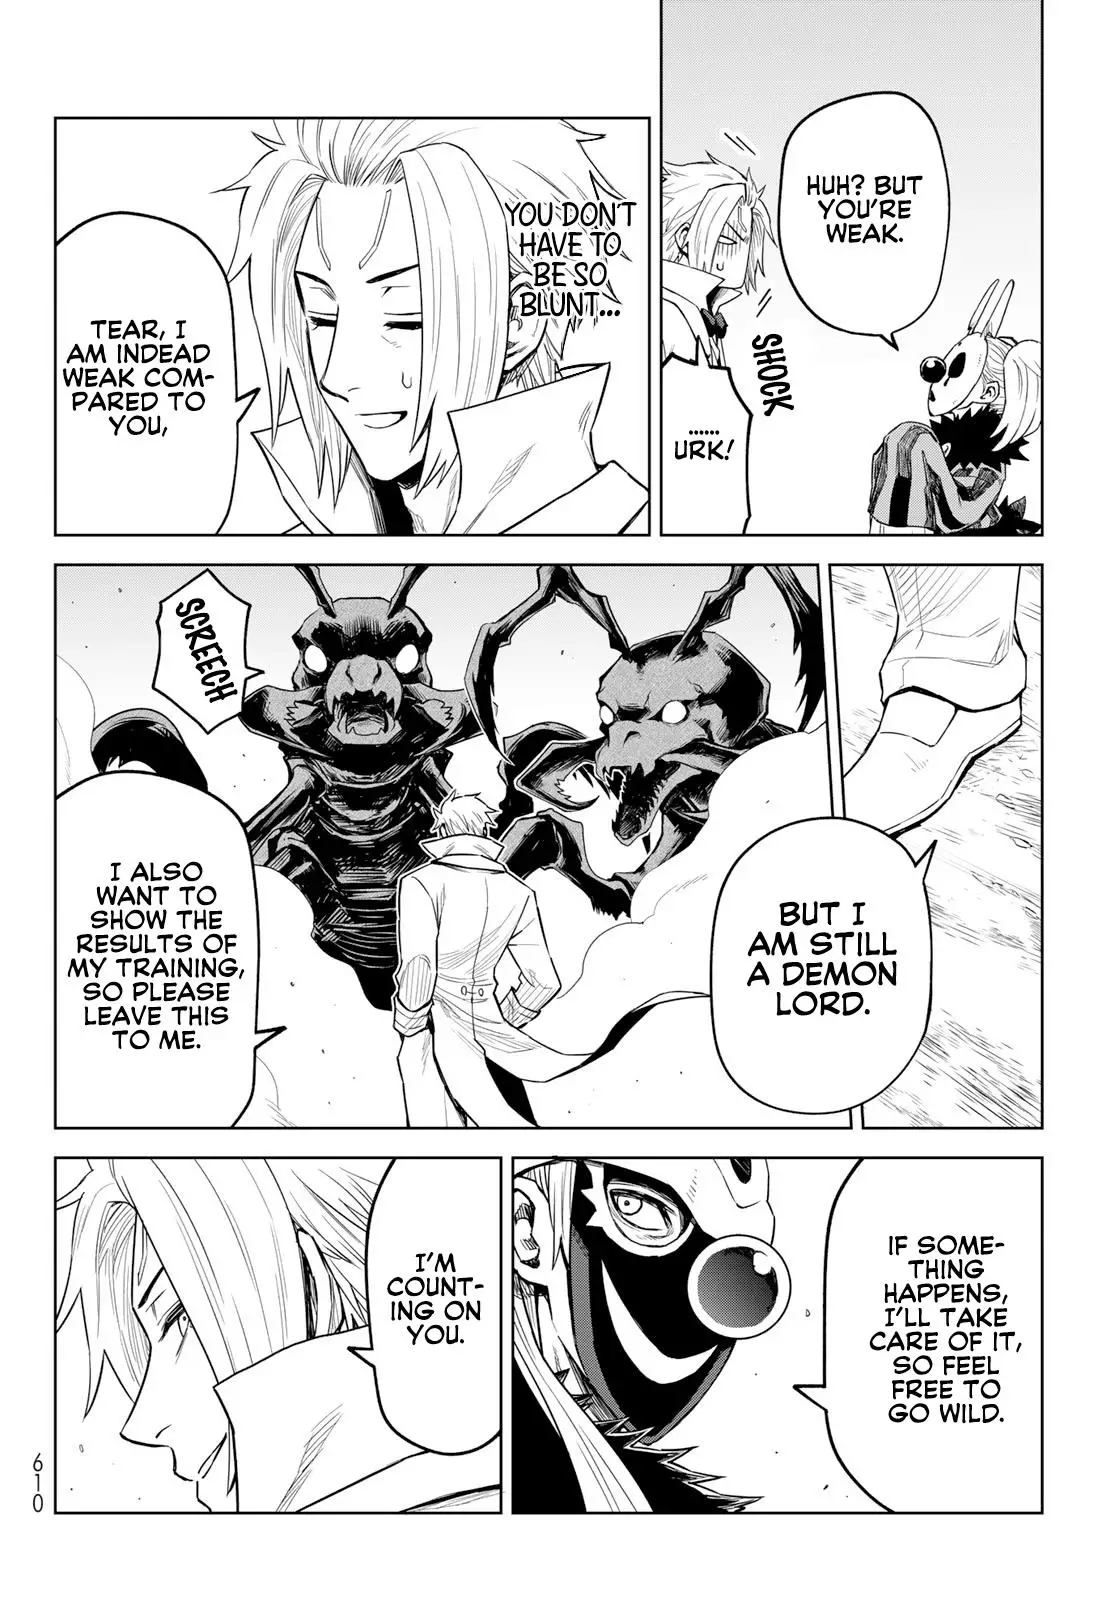 Tensei Shitara Slime Datta Ken: Clayman Revenge - 13 page 4-1388f581